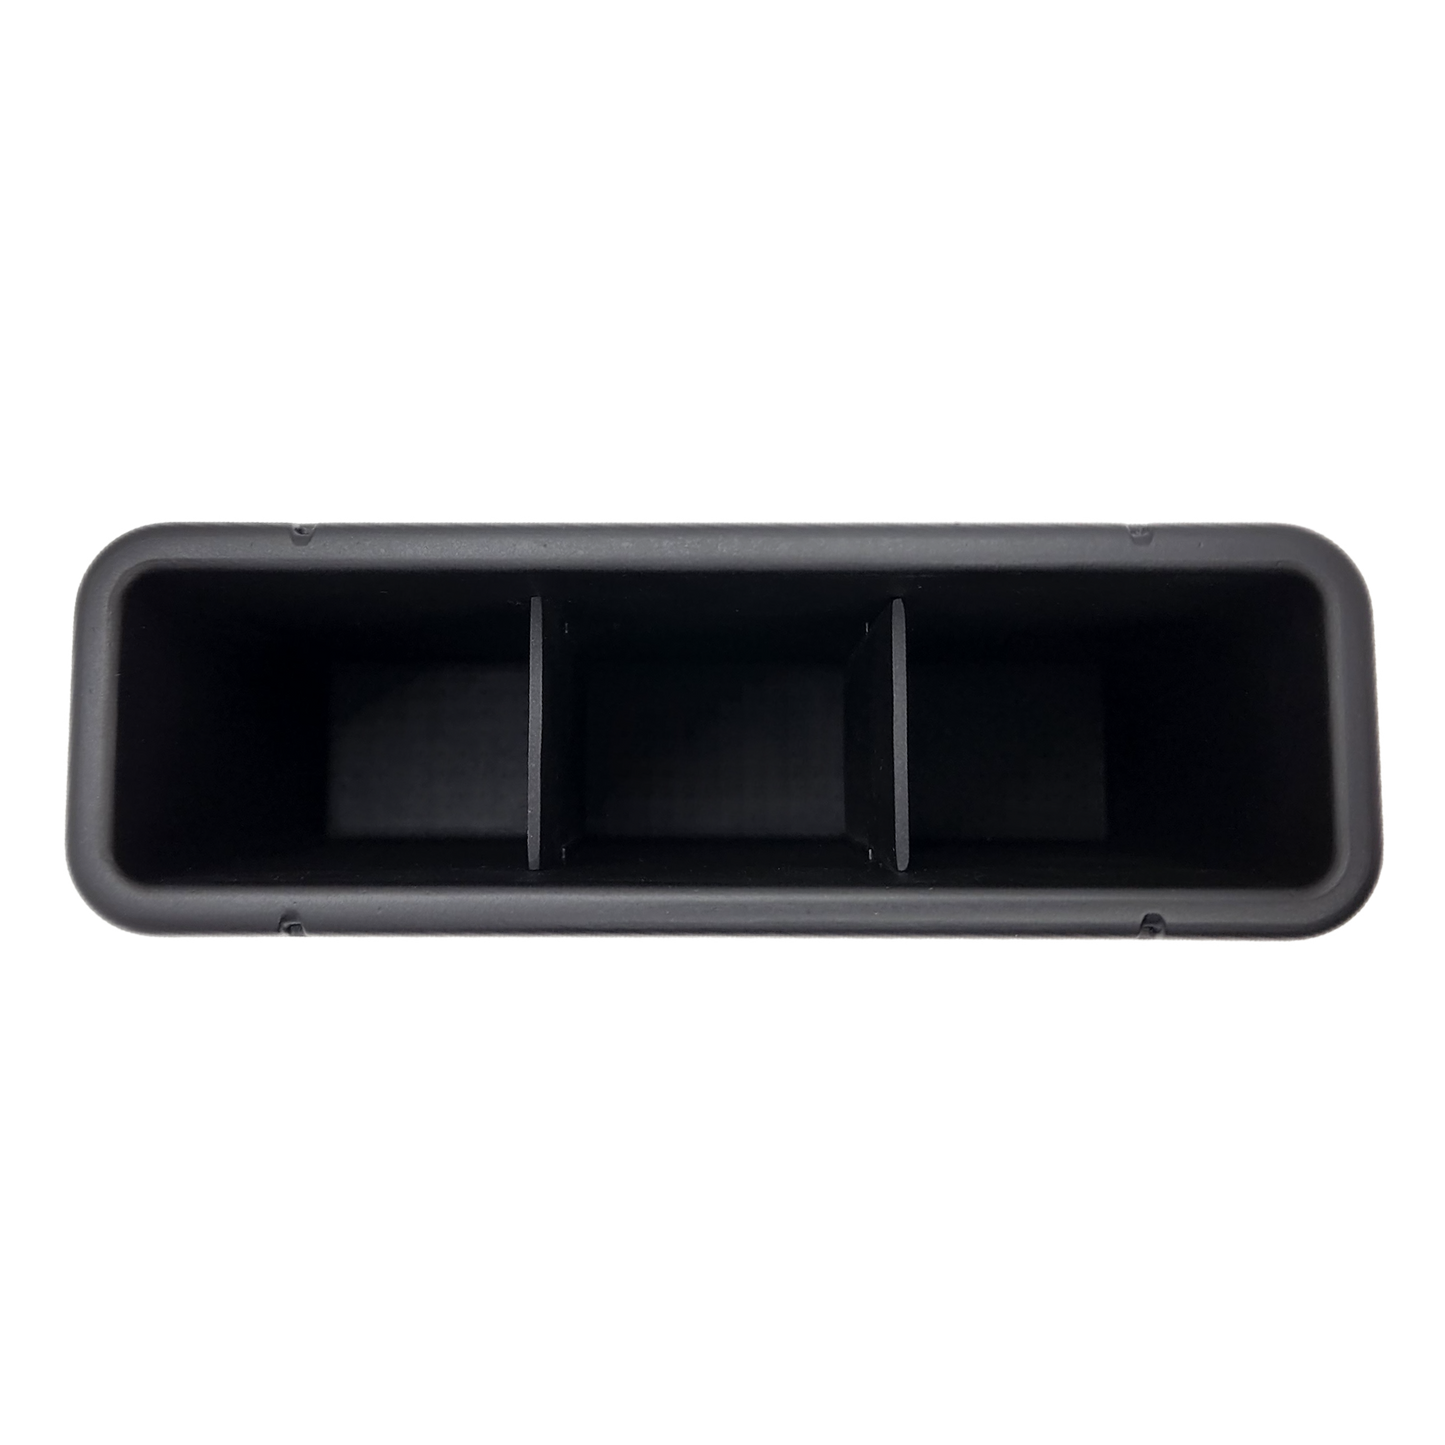 TacBox FS30 Organizer Storage Box - Mountable and Customizable